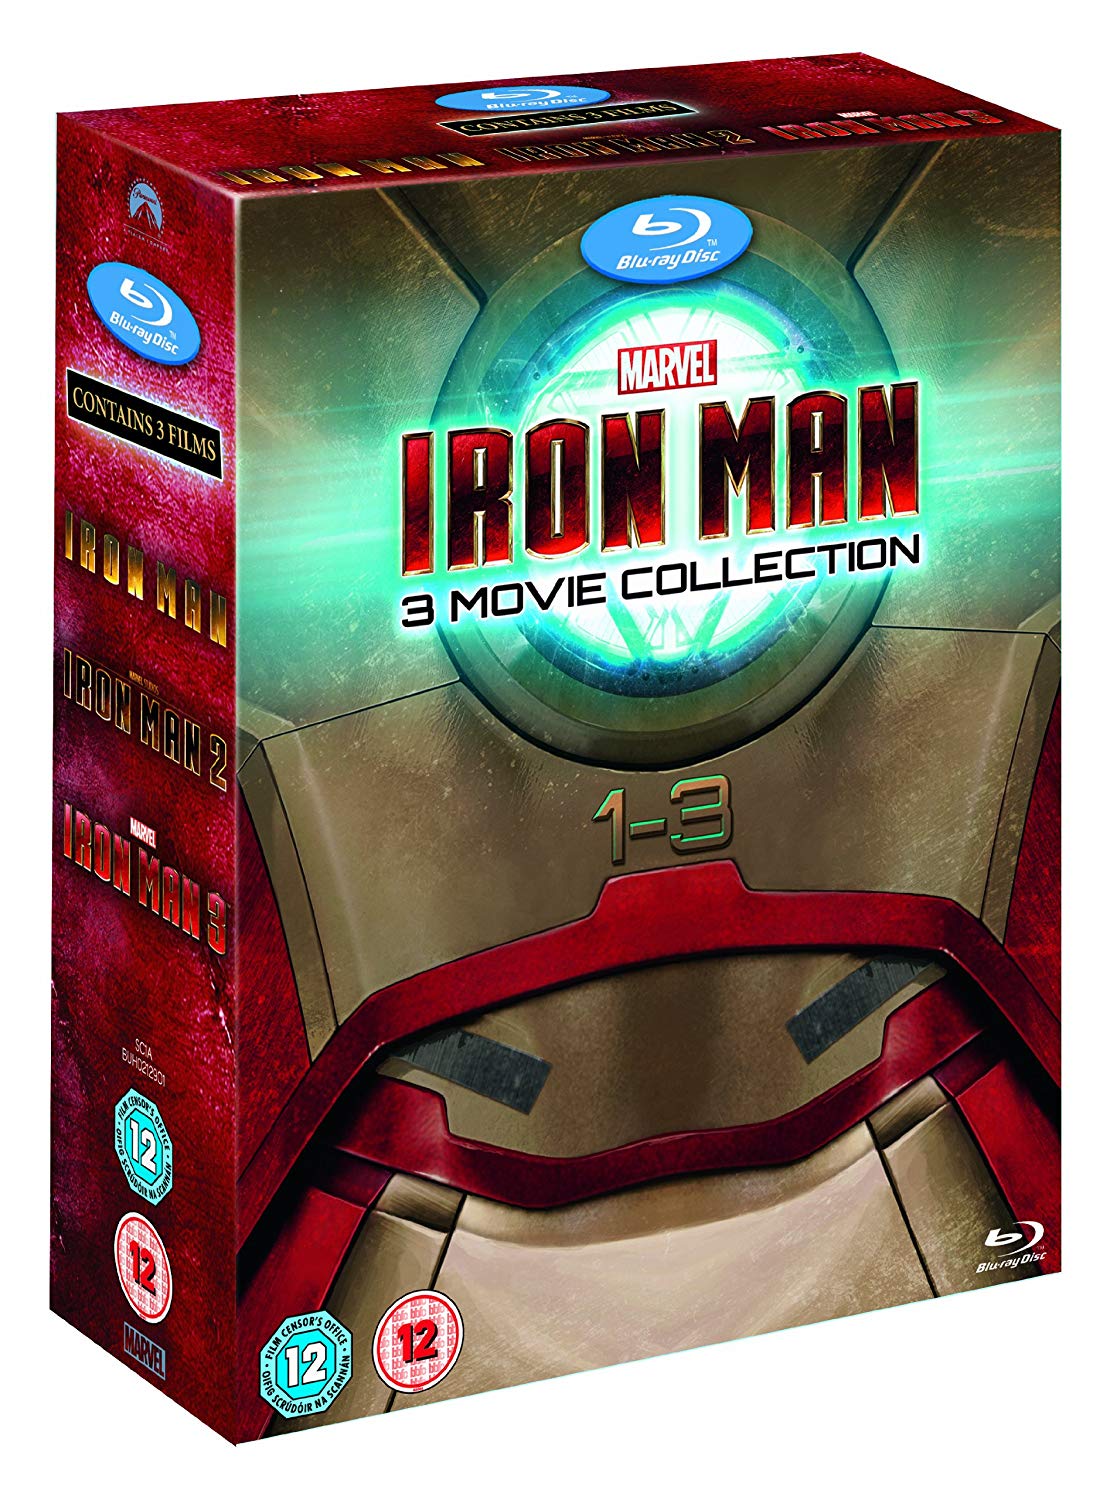 Iron Man 3 Movie Collection: Iron Man / Iron Man 2 / Iron Man 3 [Blu-ray] - image 1 of 2